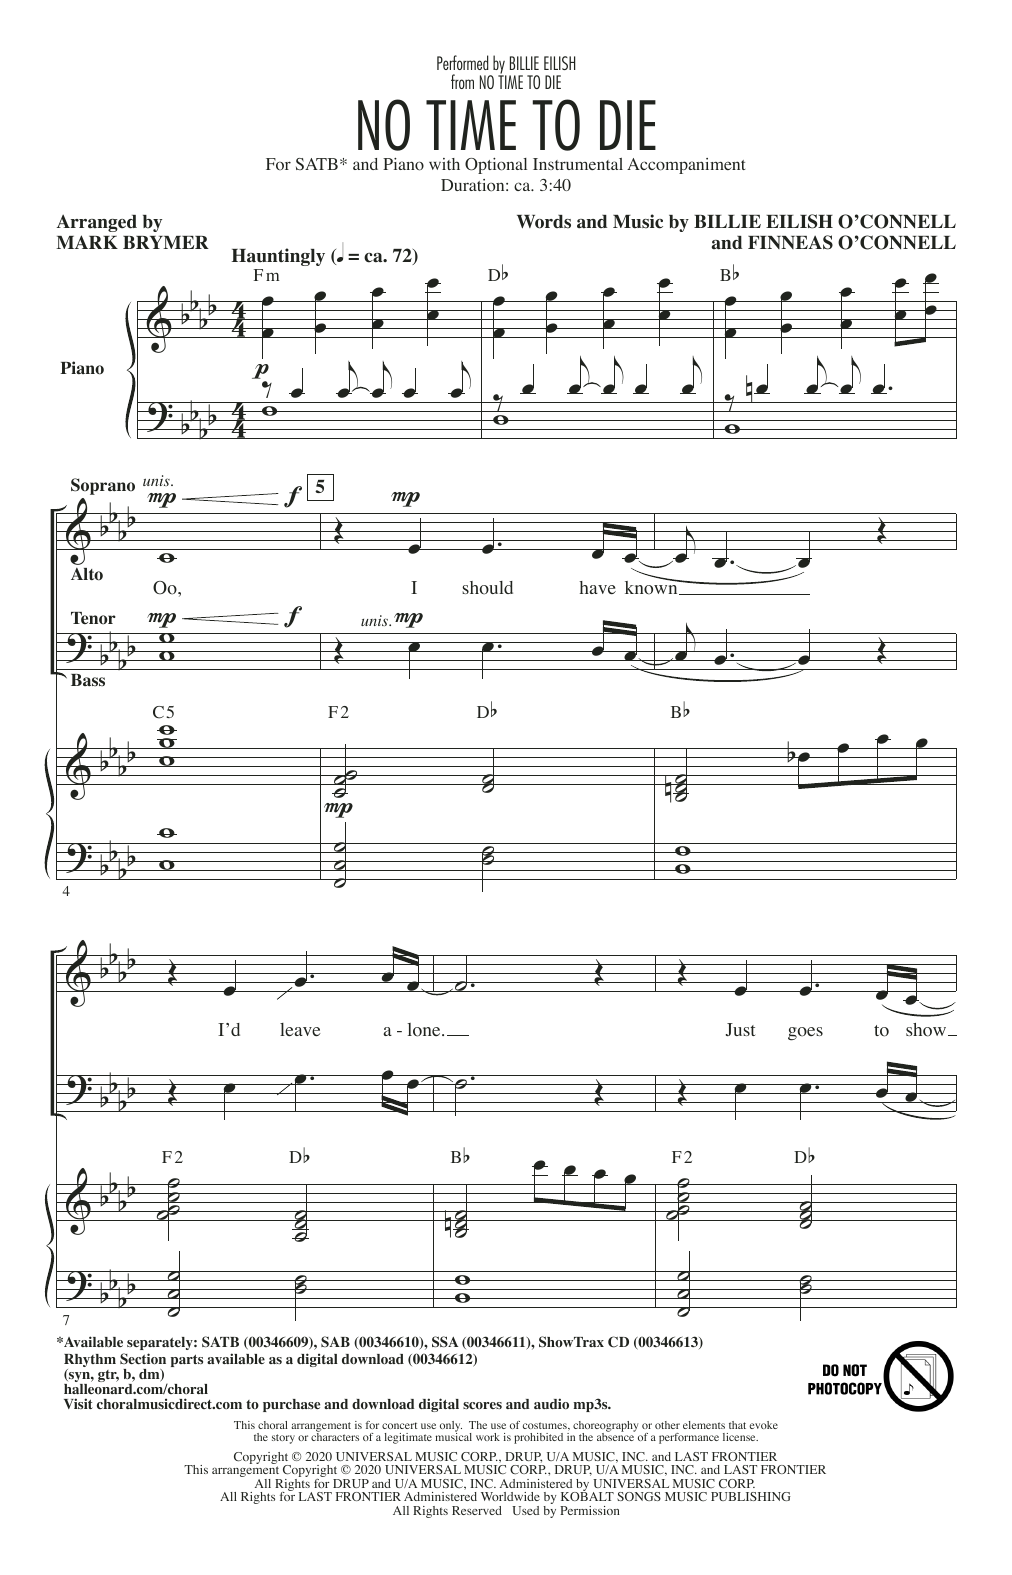 Billie Eilish No Time To Die (arr. Mark Brymer) Sheet Music Notes & Chords for SAB Choir - Download or Print PDF